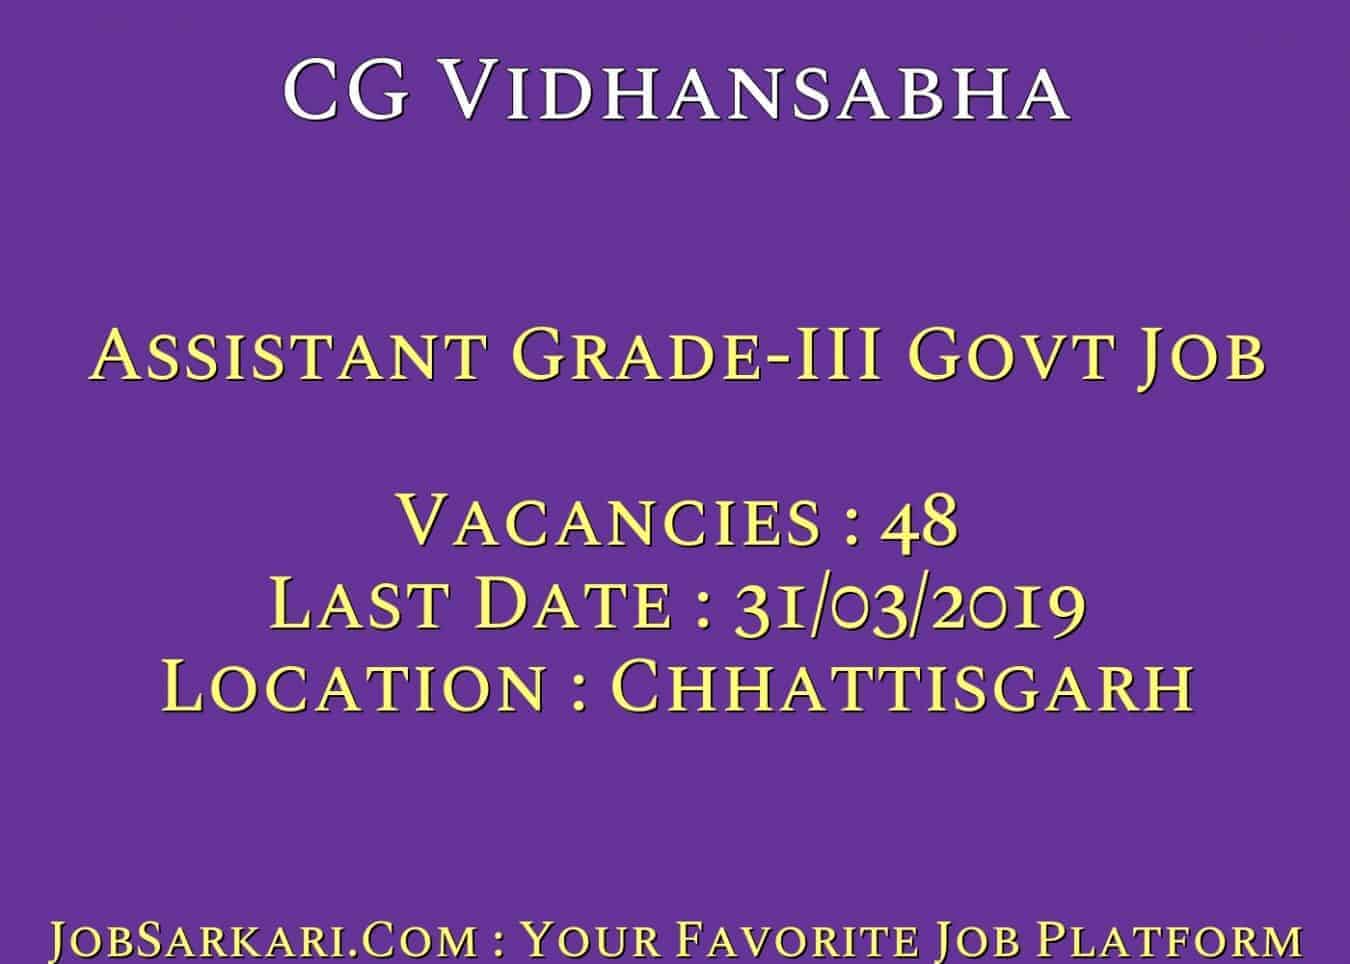 CG Vidhansabha Recruitment 2019 For Assistant Grade-III Govt Job